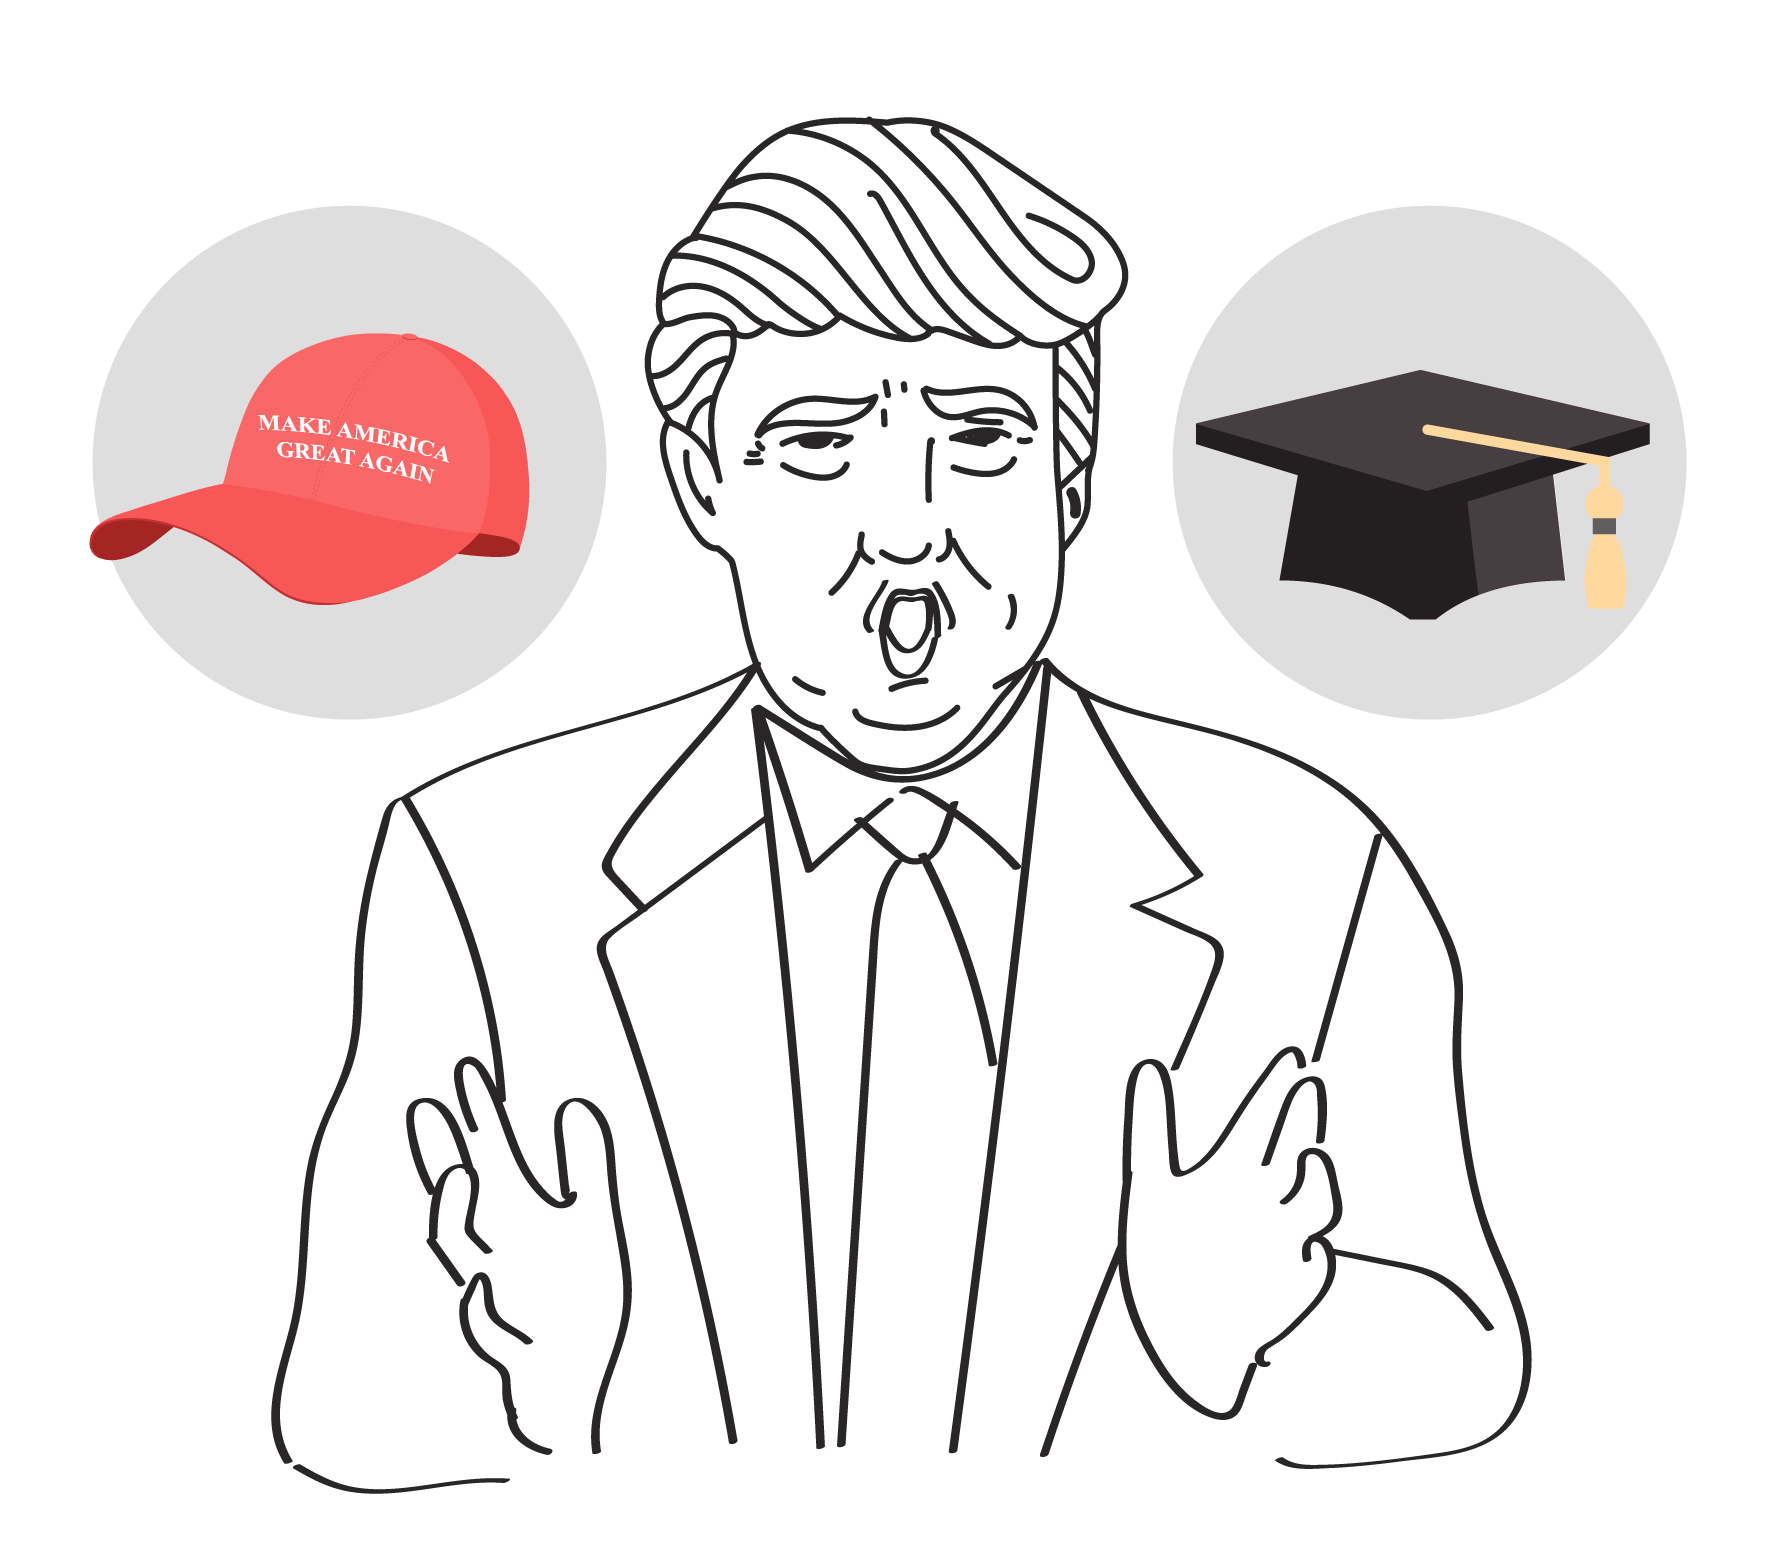 Donald Trump or Trump University